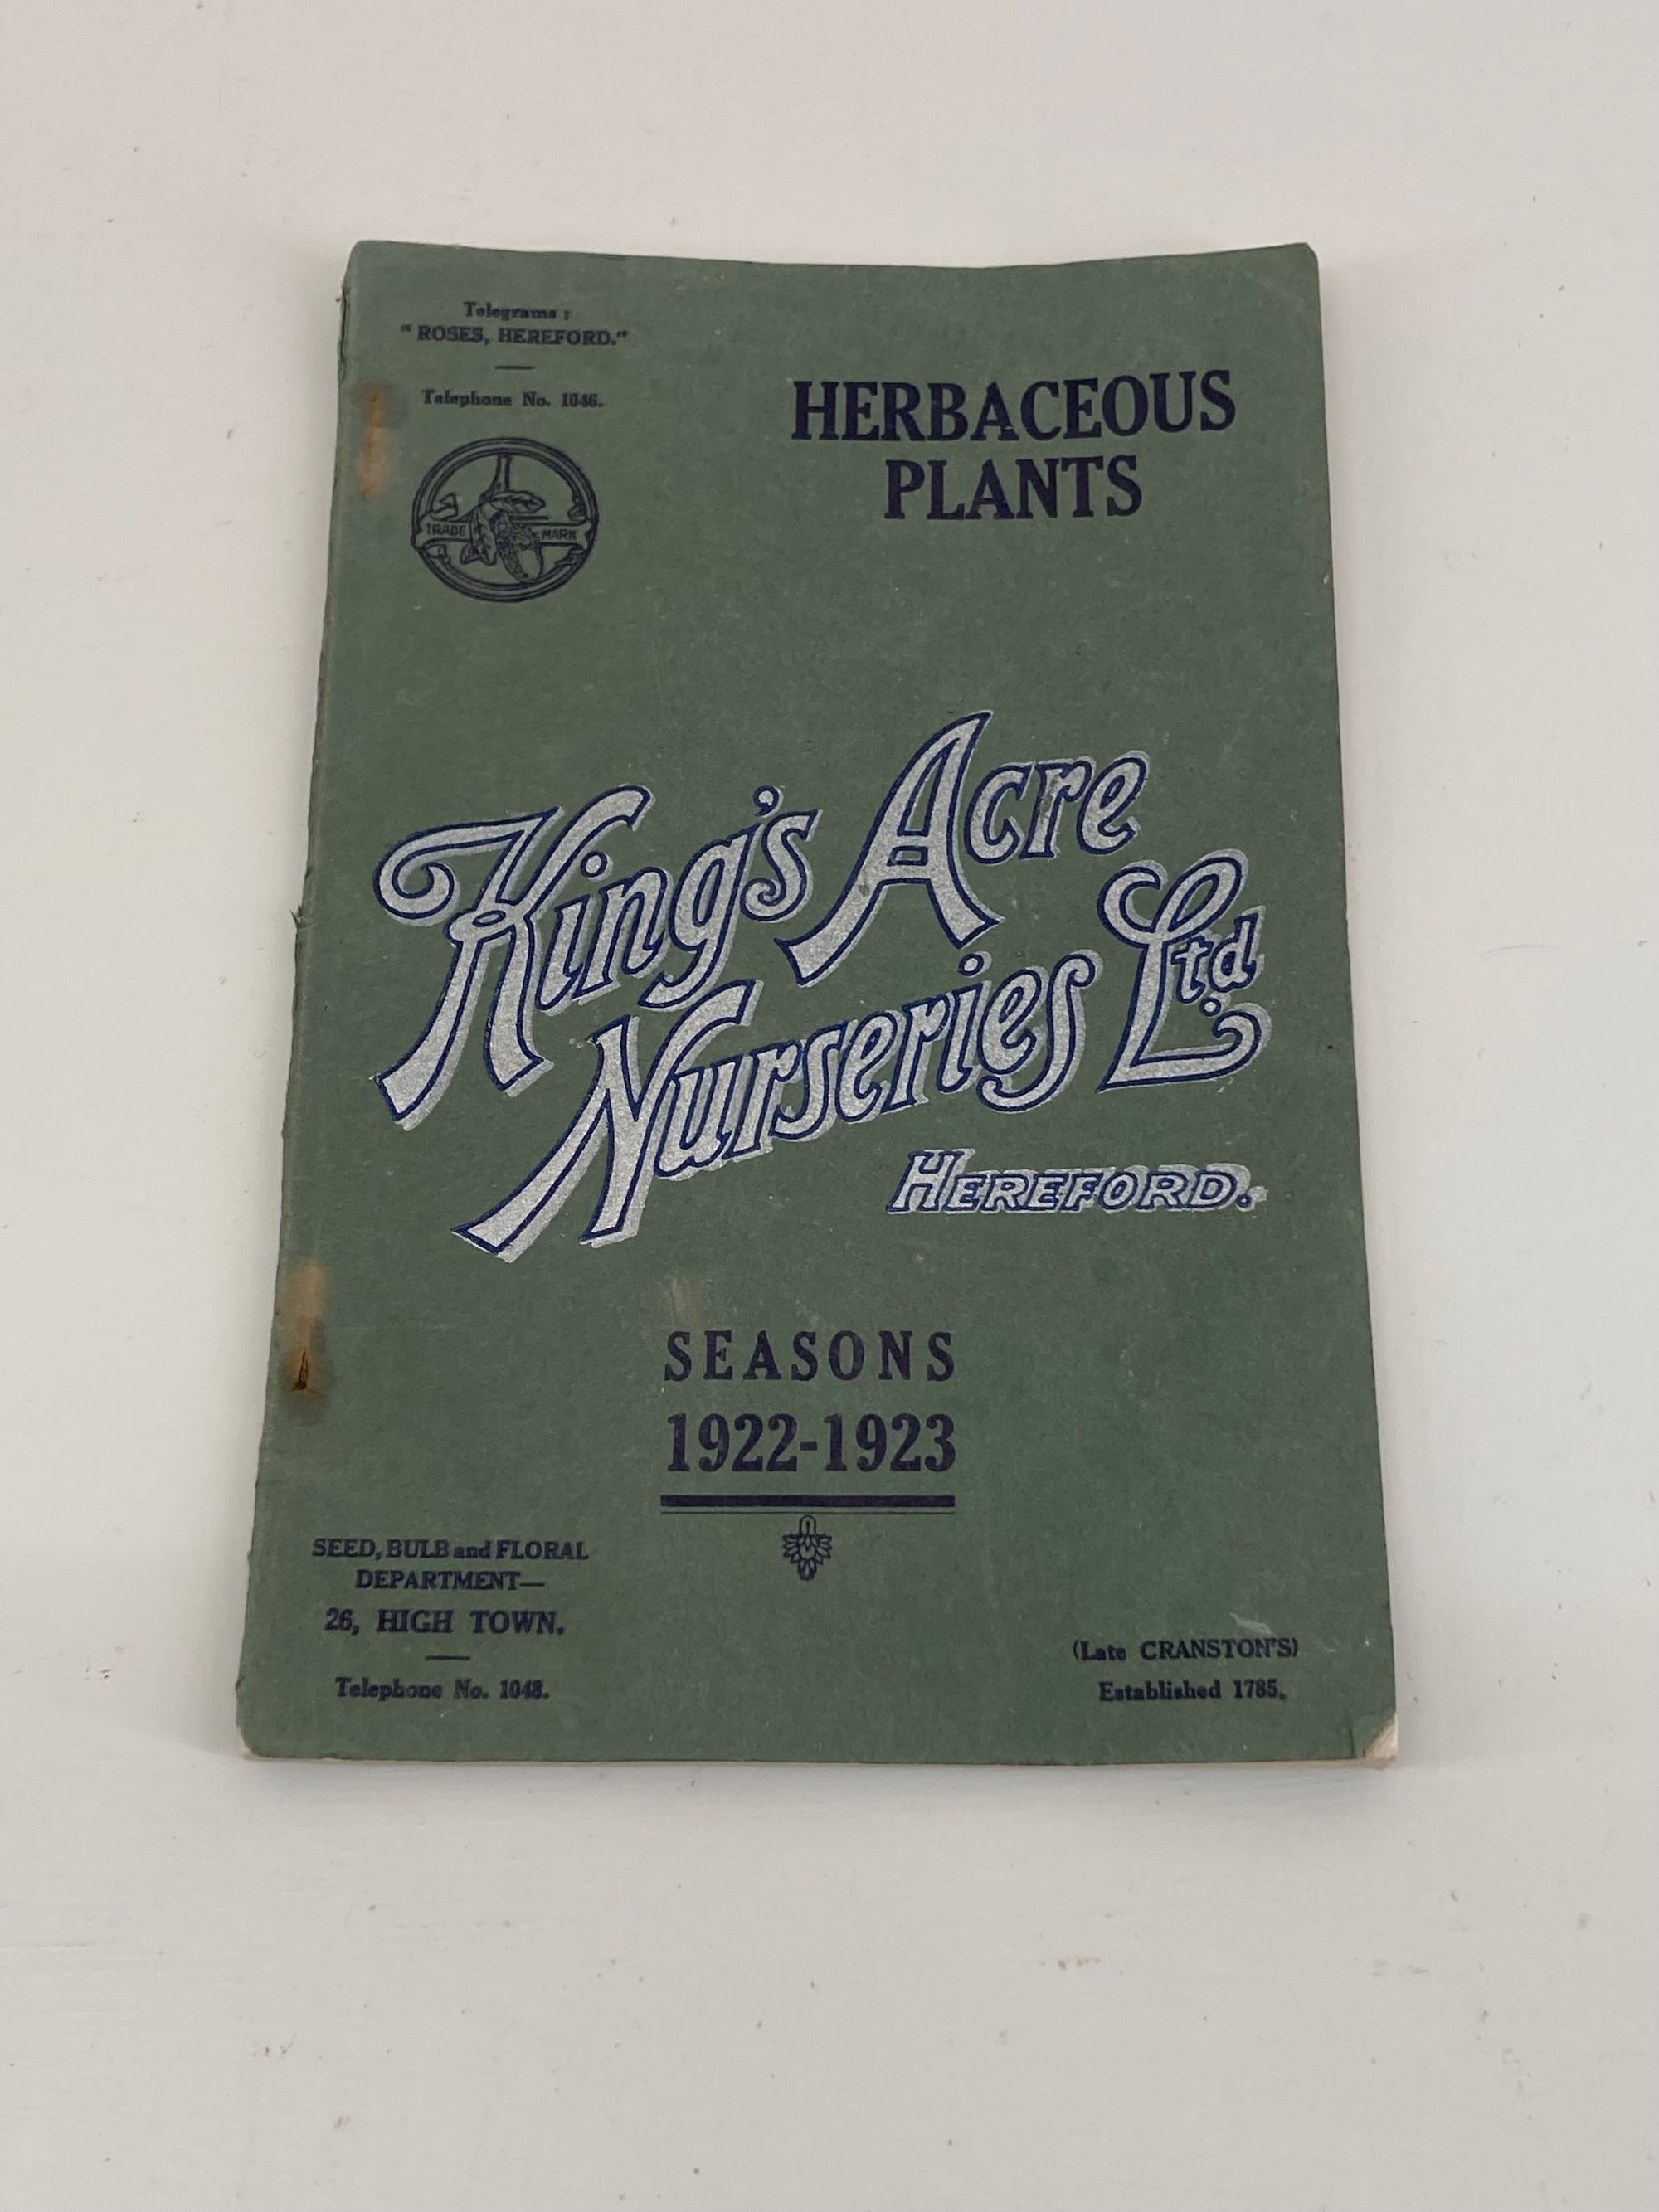 Kings Acre Nursery Catalogue for 1922-23